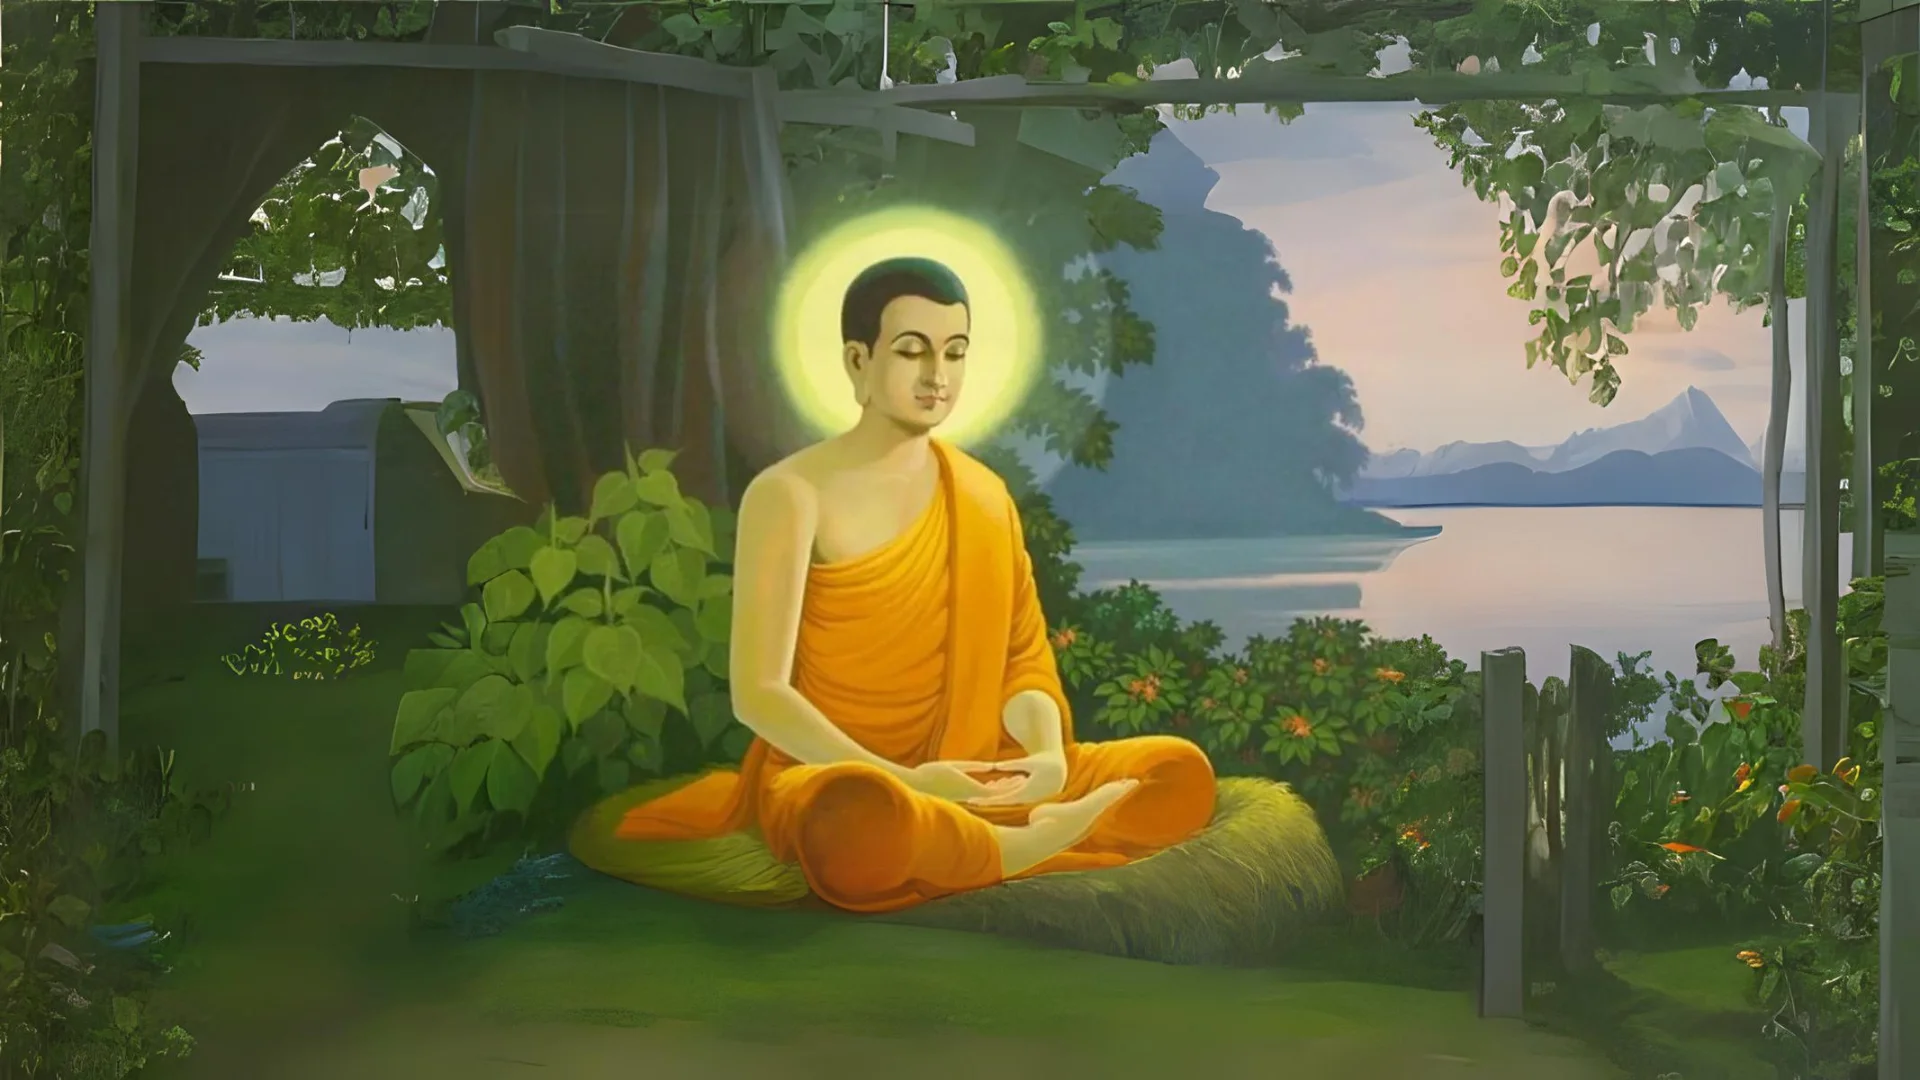 BUDDHIST MEDITATION